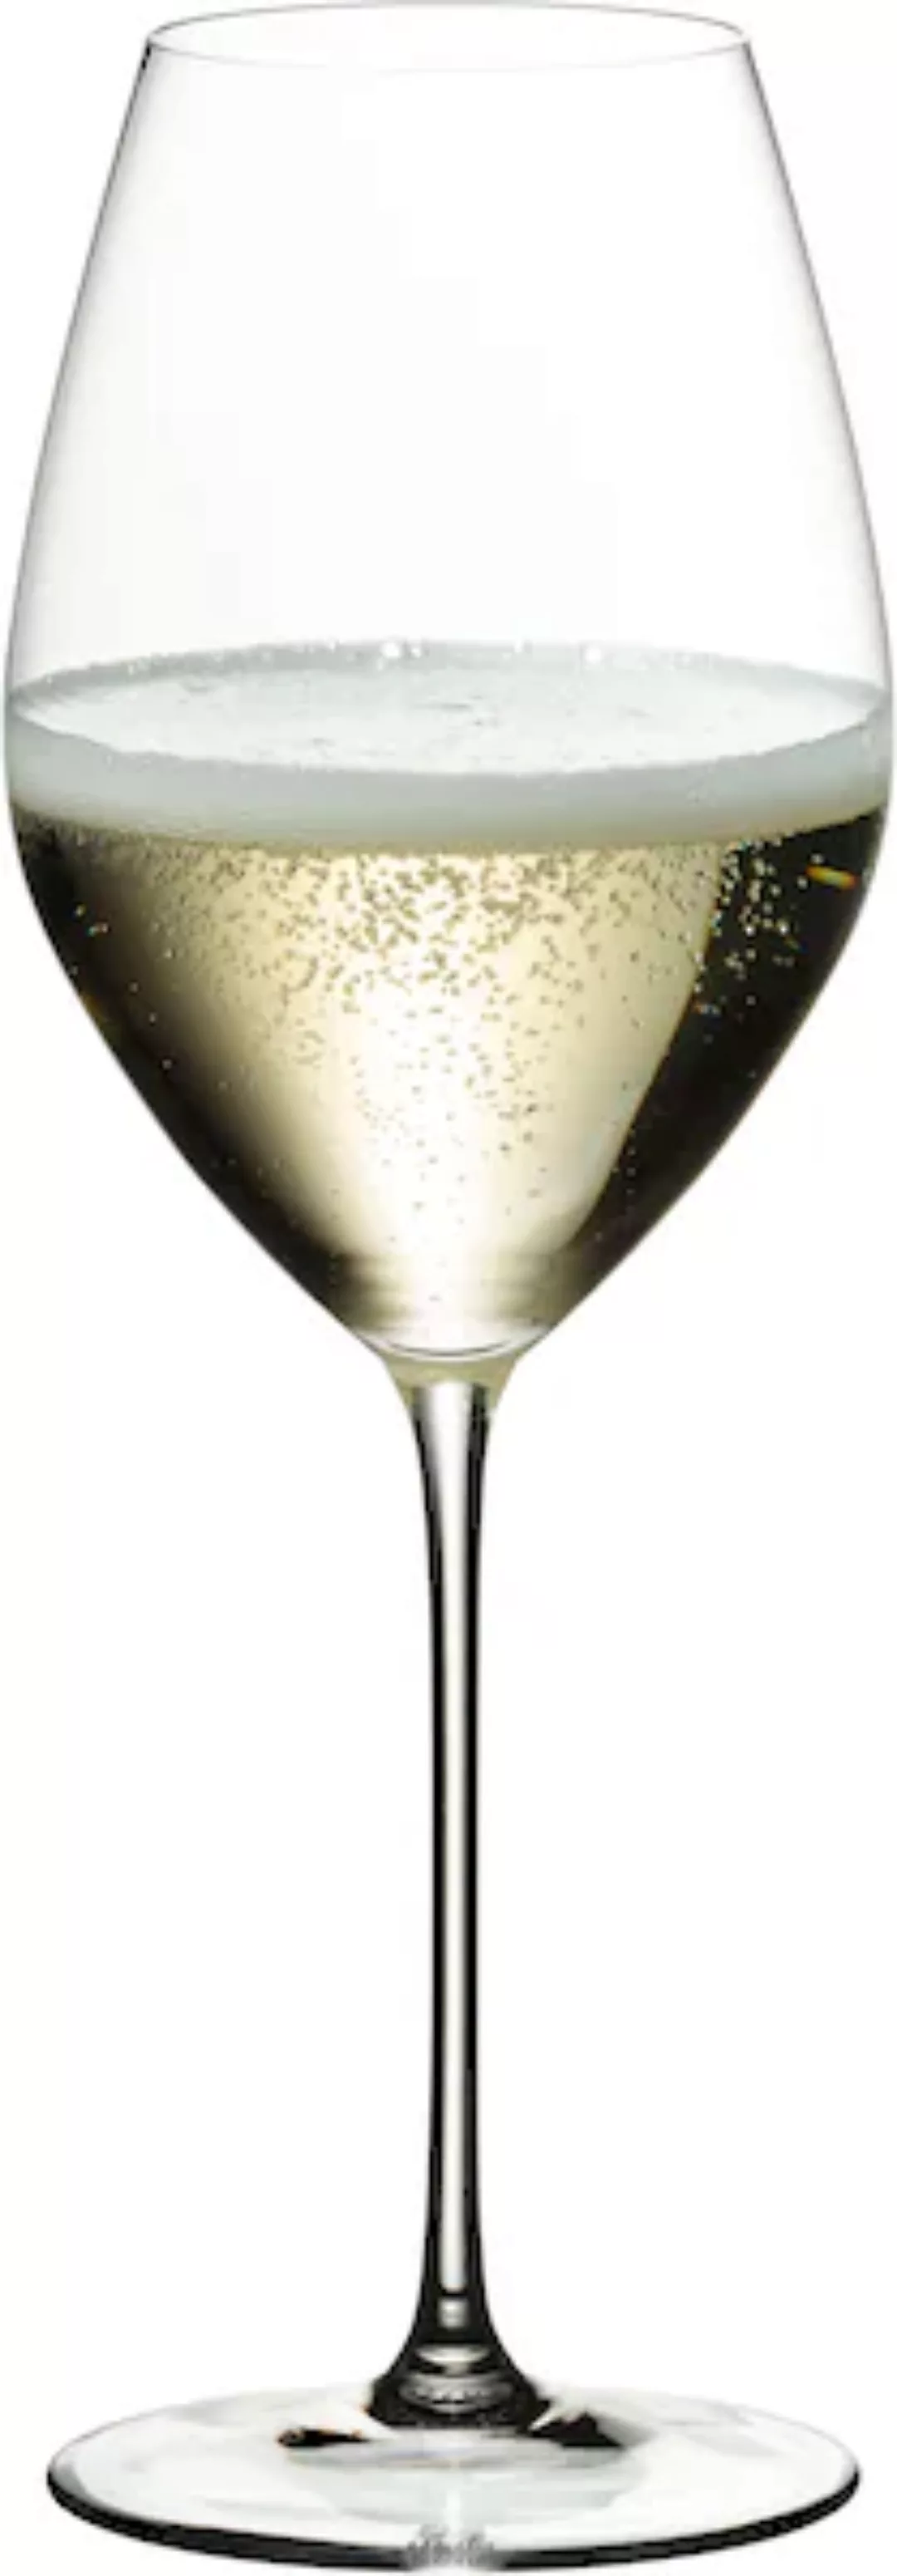 RIEDEL THE WINE GLASS COMPANY Champagnerglas »Veritas«, (Set, 2 tlg.), Made günstig online kaufen